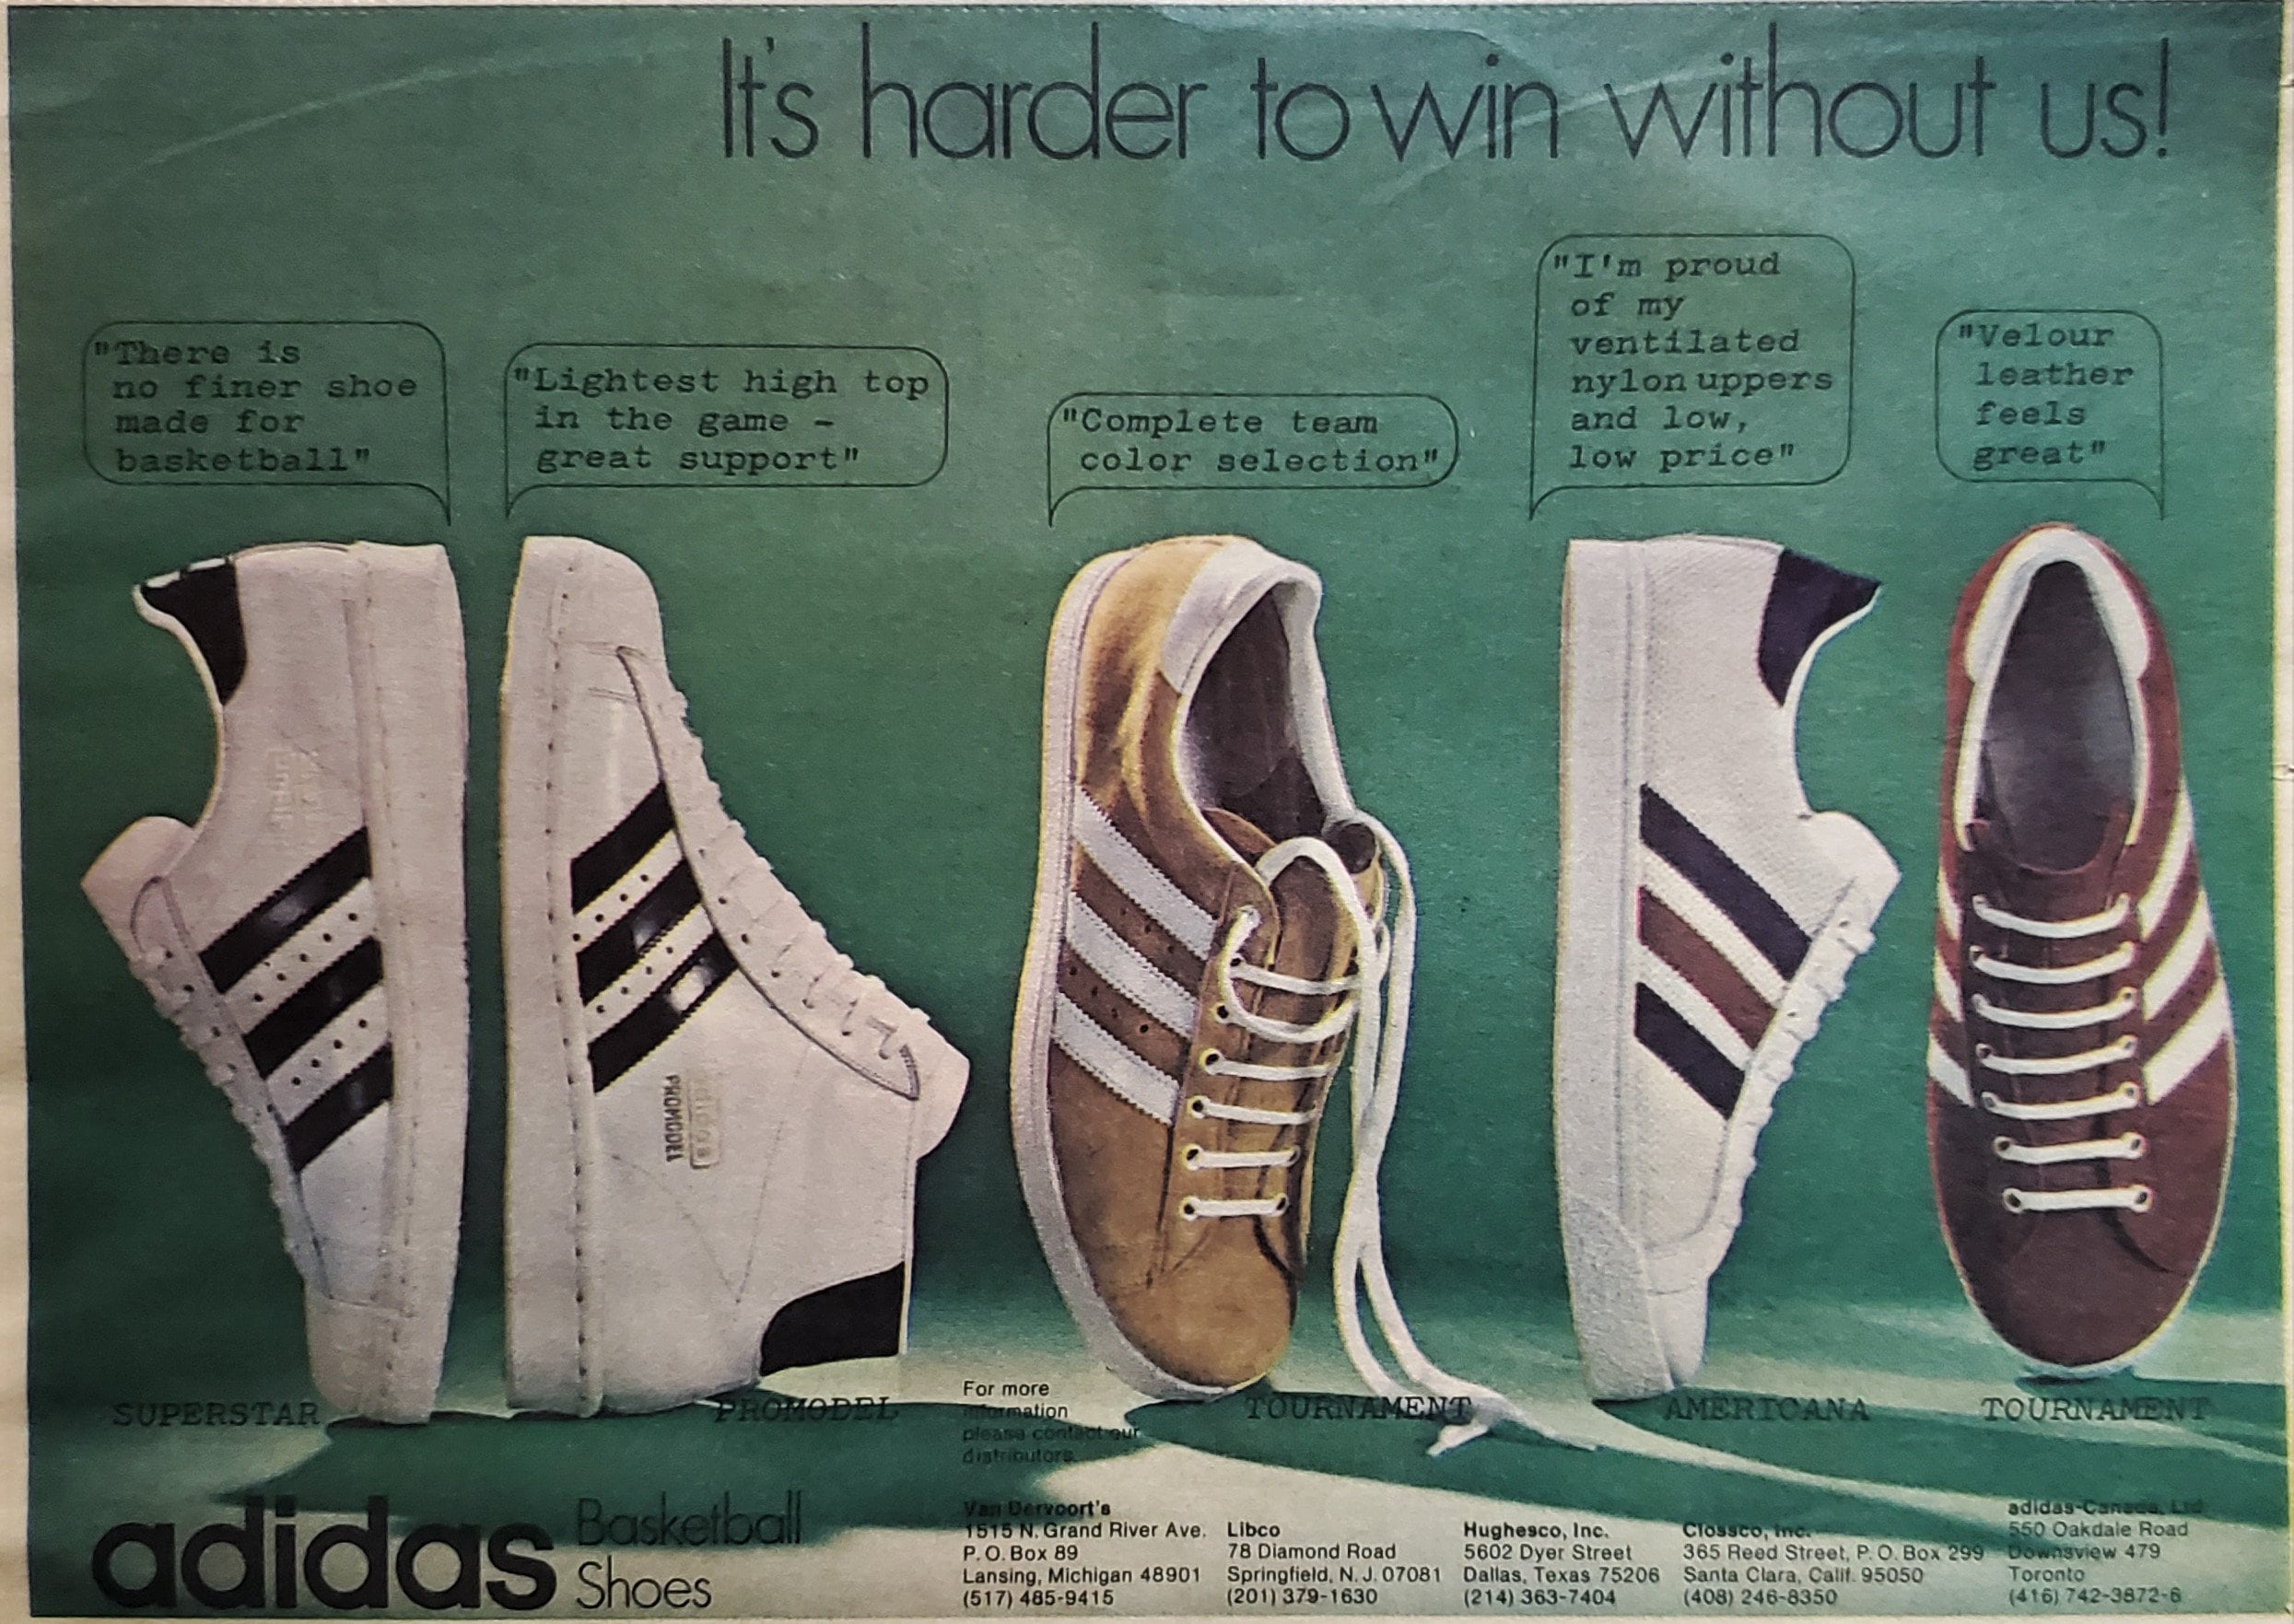 Adidas Basketball Shoe ADVERTISEMENT 1972 8x11 Color Photos - UK